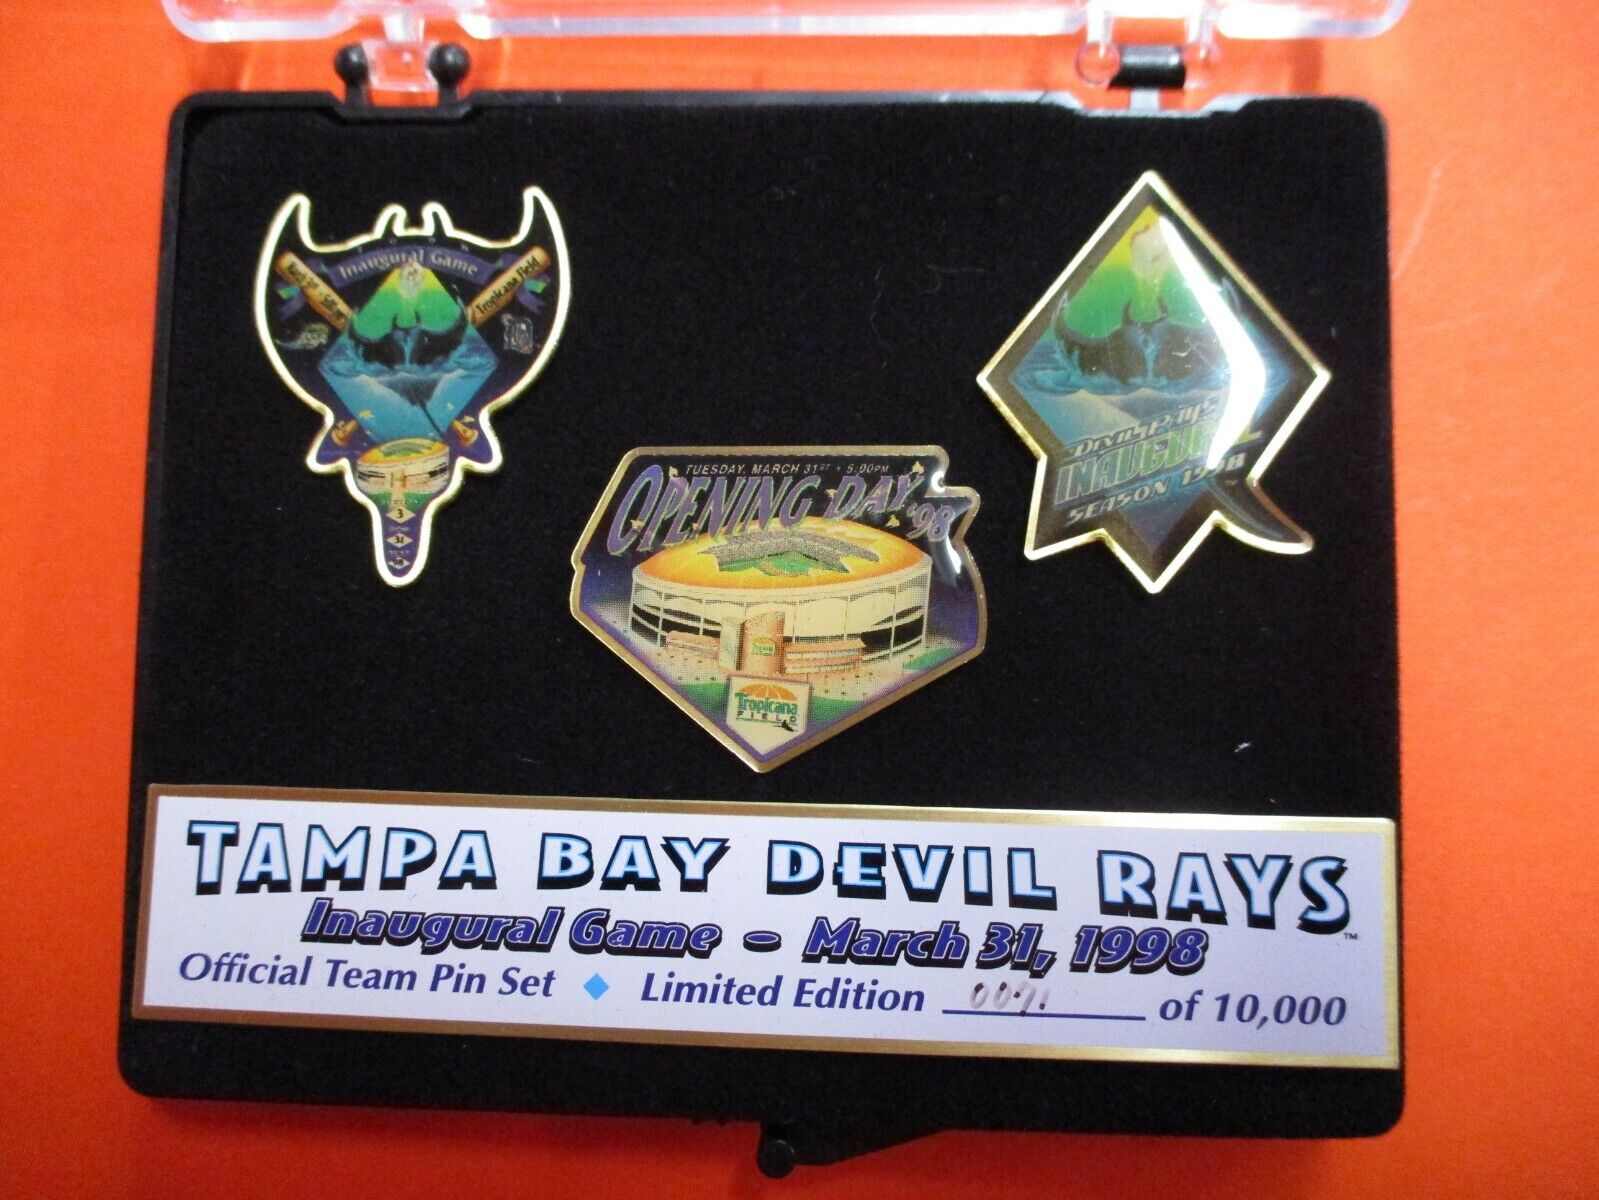 Tampa Bay Devil Rays Inaugural Game 3 Pin Limited Edition LTD Set